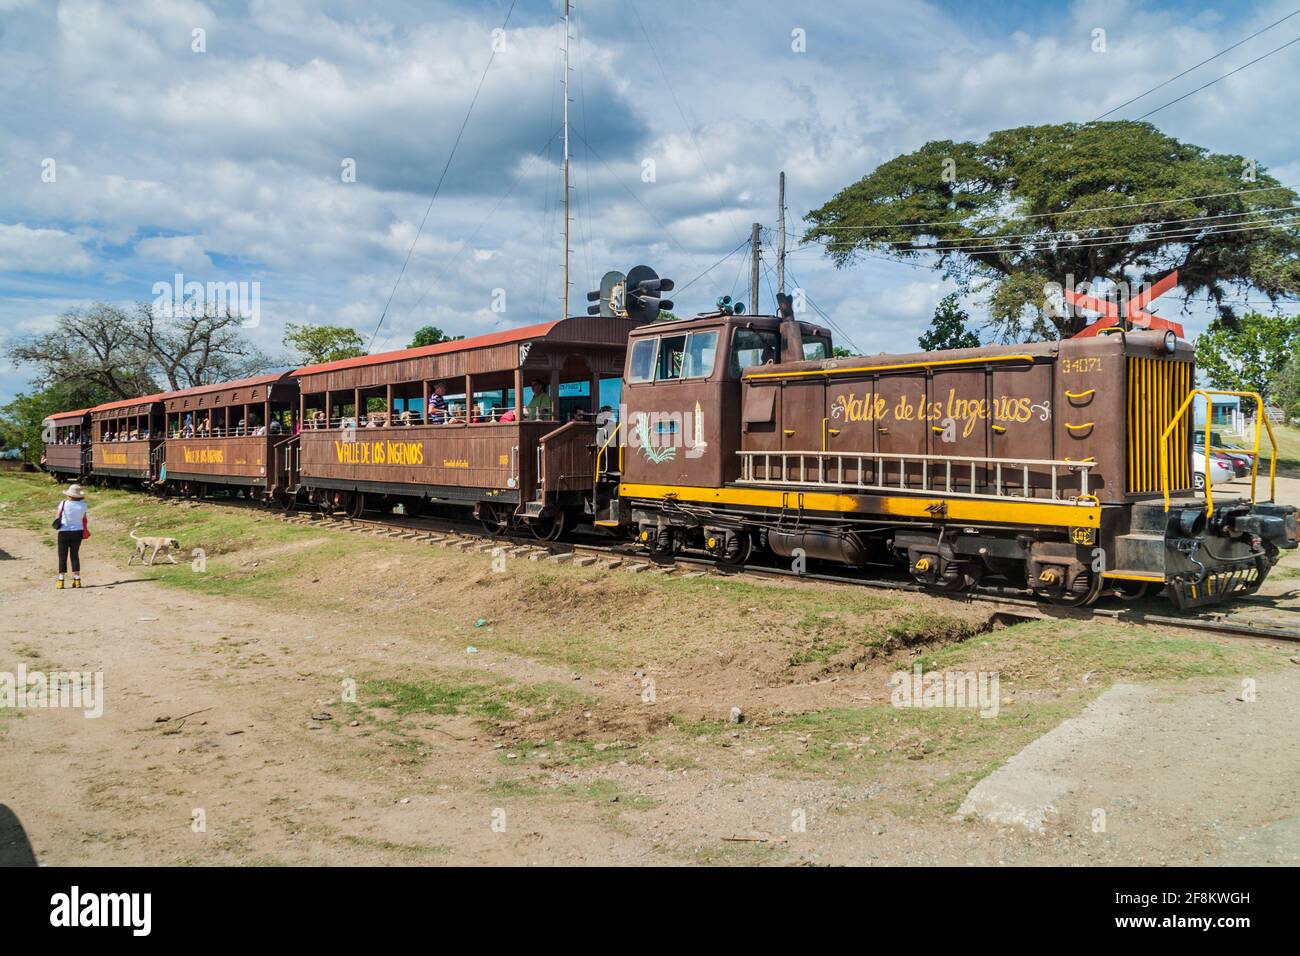 IZNAGA, KUBA - 9. FEB 2016: Lokaler Zug im Dorf Iznaga im Tal Valle de los Ingenios in der Nähe von Trinidad, Kuba Stockfoto